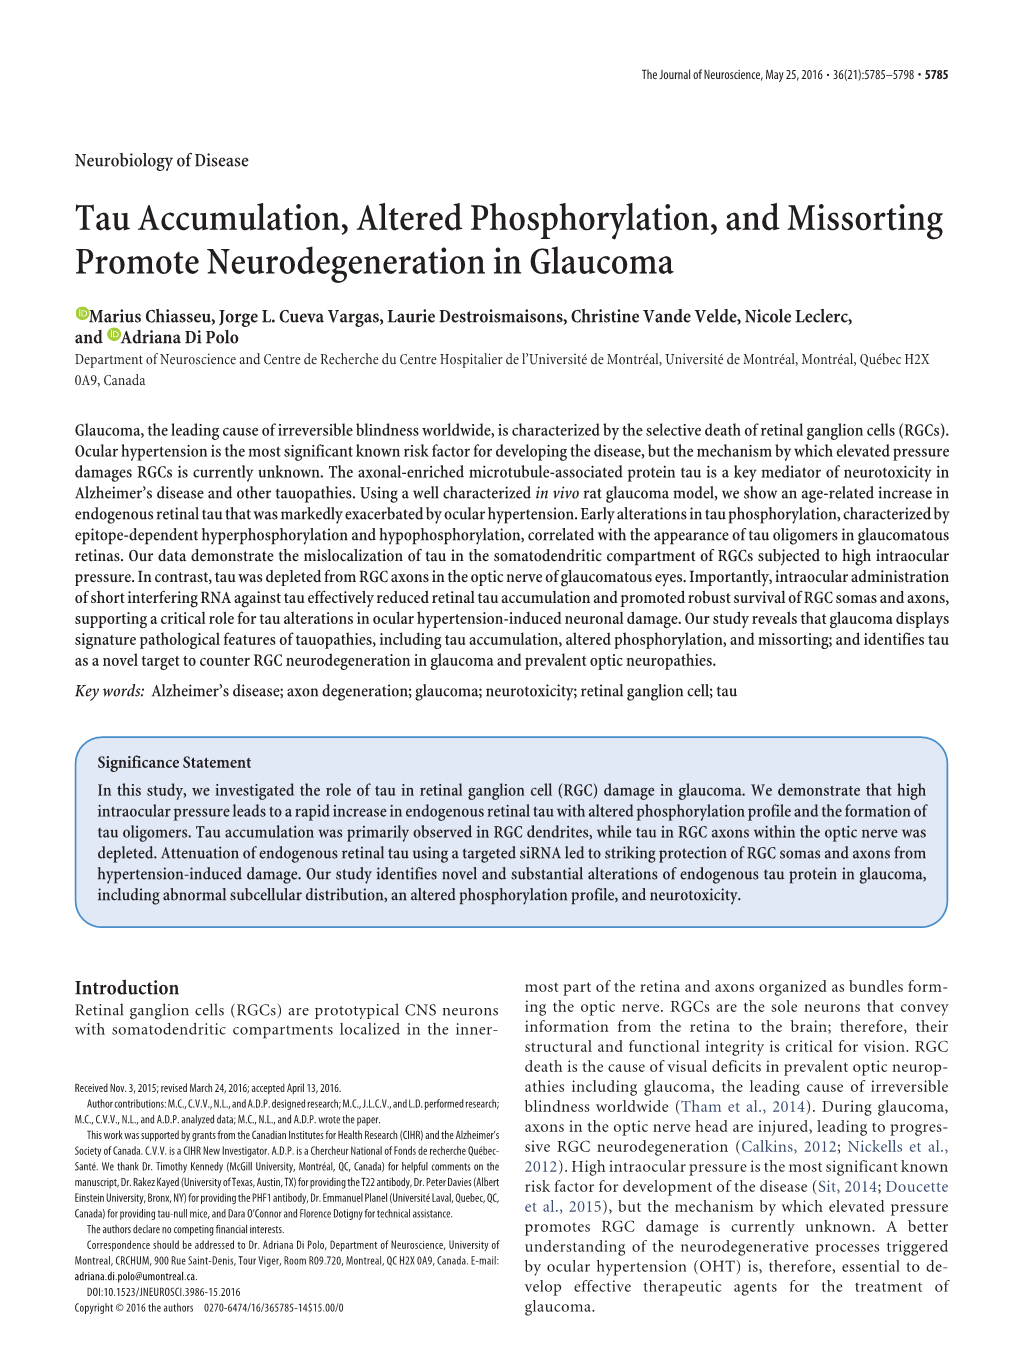 Tau Accumulation, Altered Phosphorylation, and Missorting Promote Neurodegeneration in Glaucoma